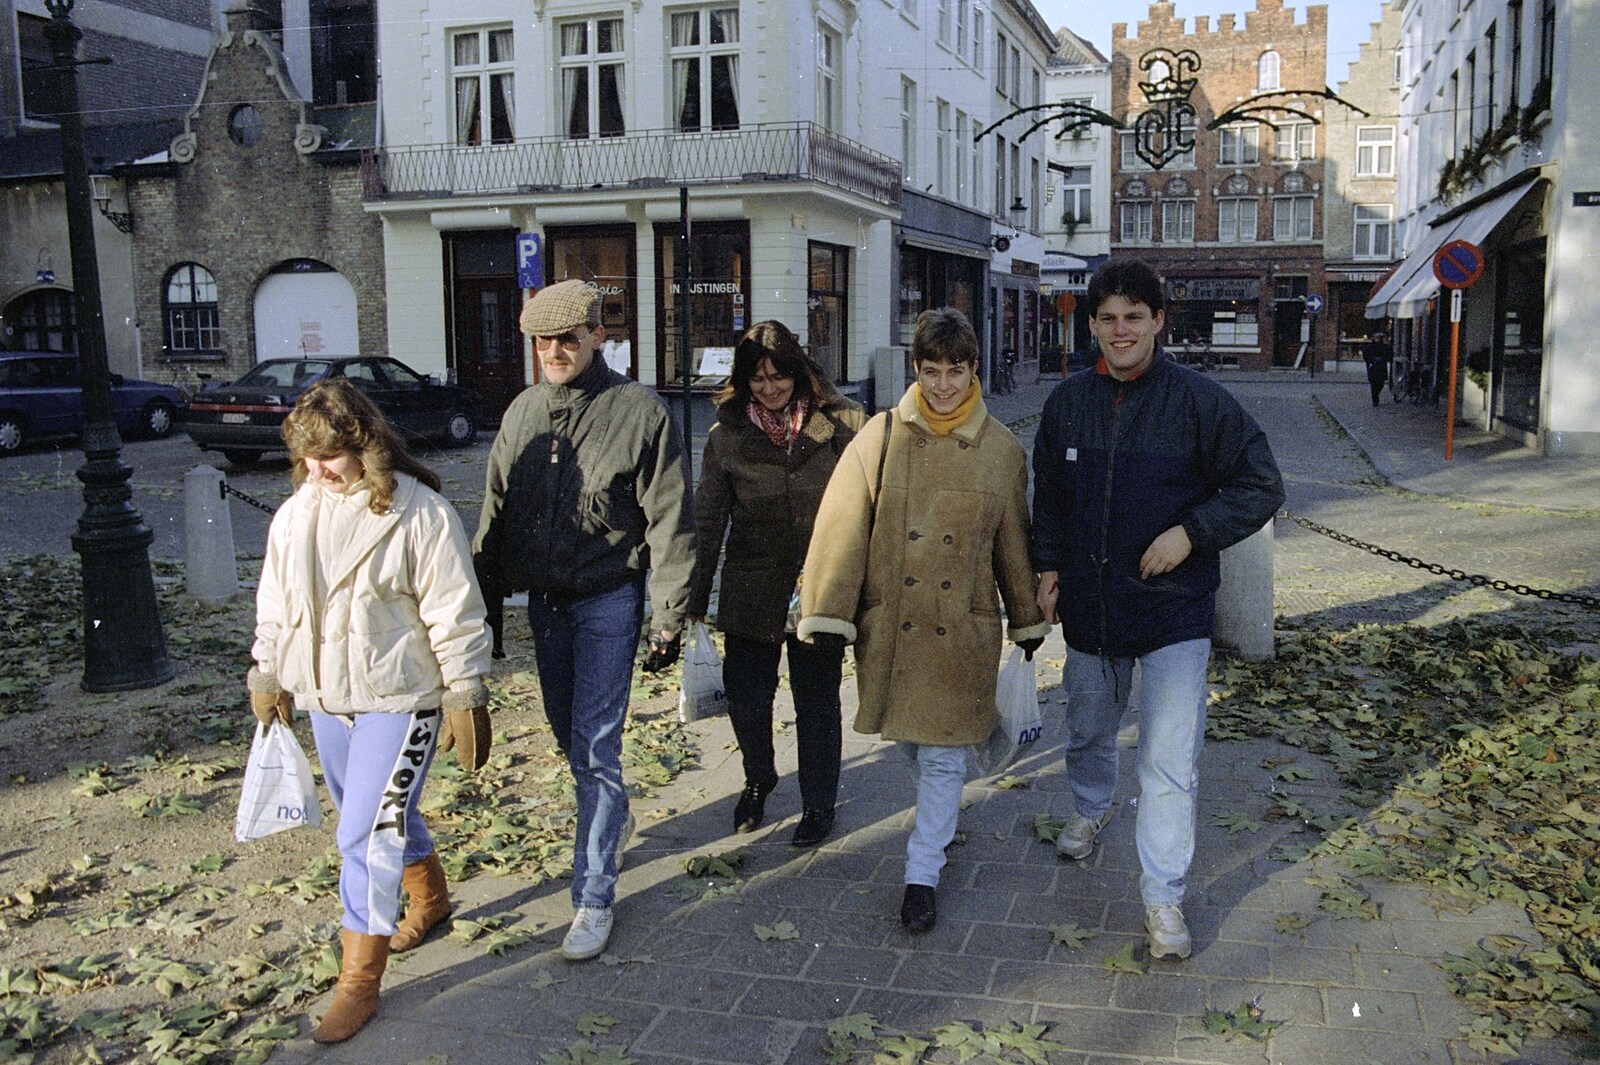 Strolling around Bruges from Clays Does Bruges, Belgium - 19th December 1992